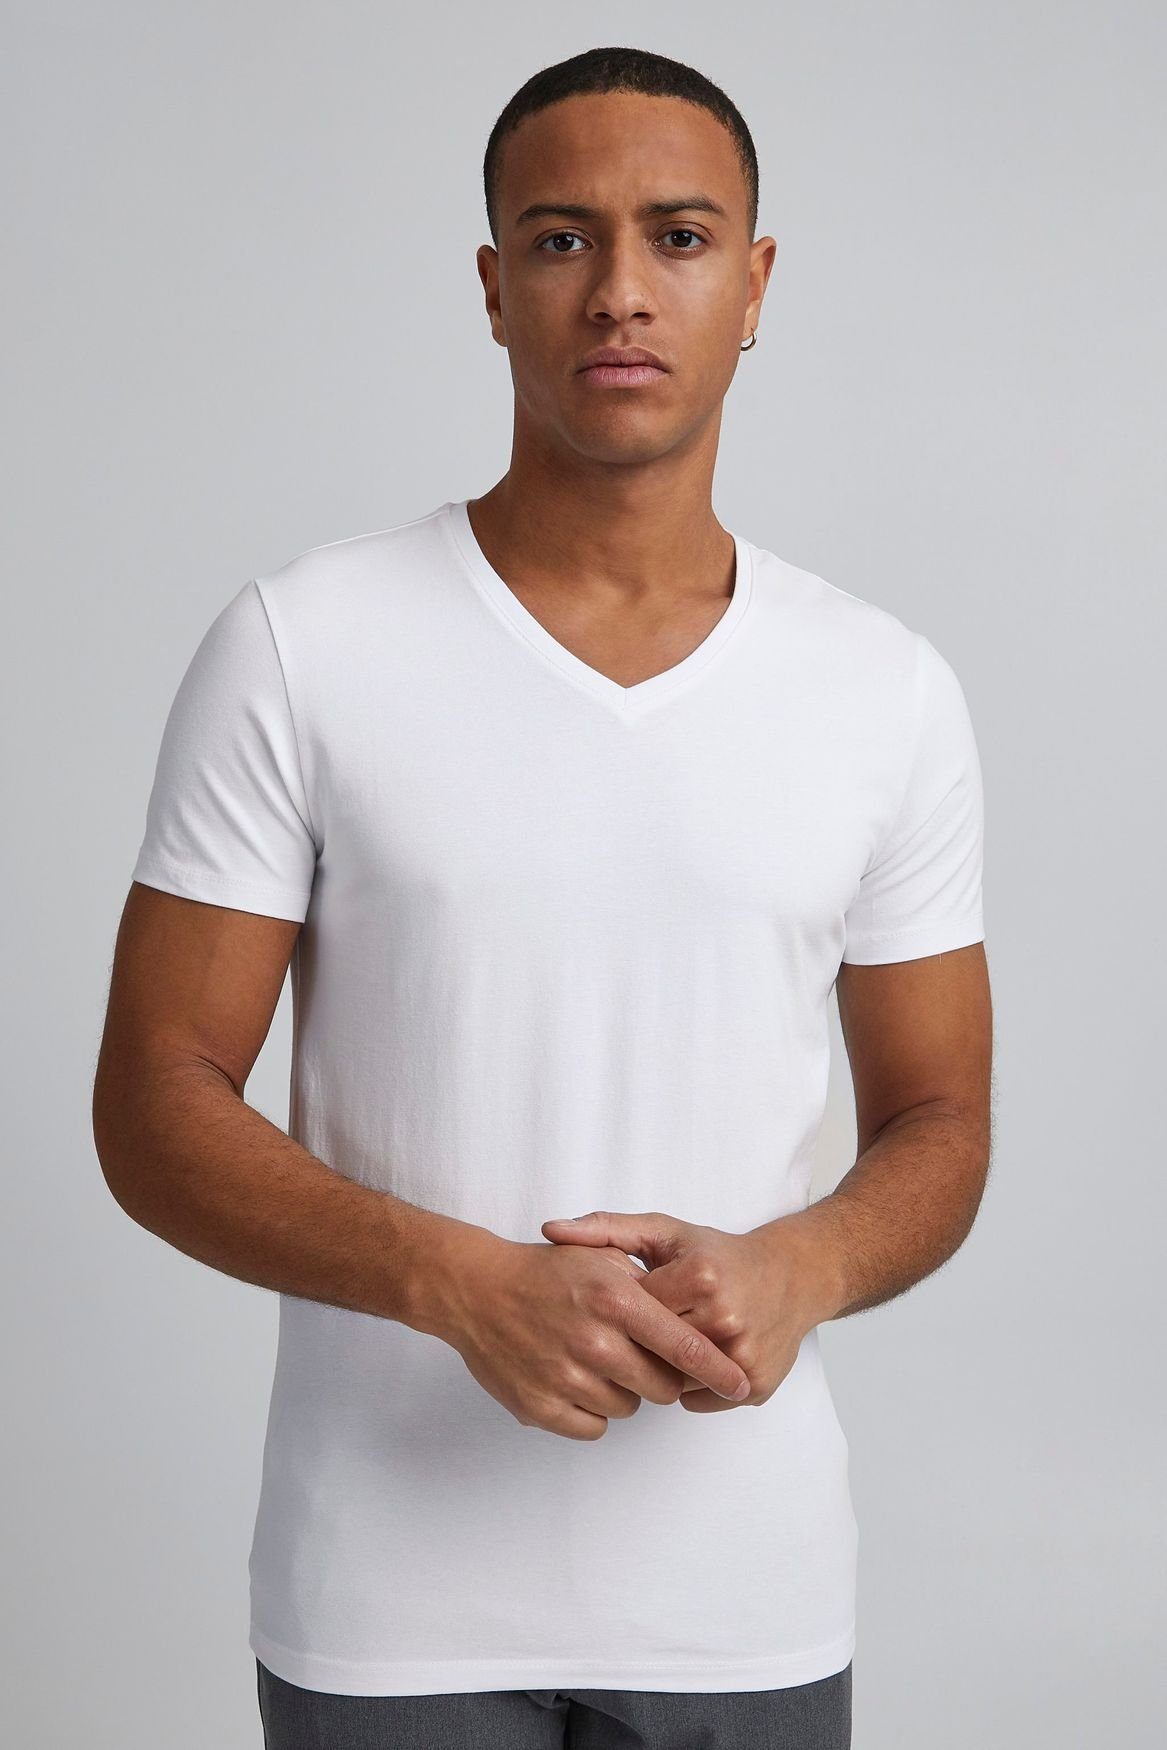 Casual Friday T-Shirt V-Ausschnitt Einfarbiges Kurzarm 4458 T-Shirt Weiß in Basic LINCOLN